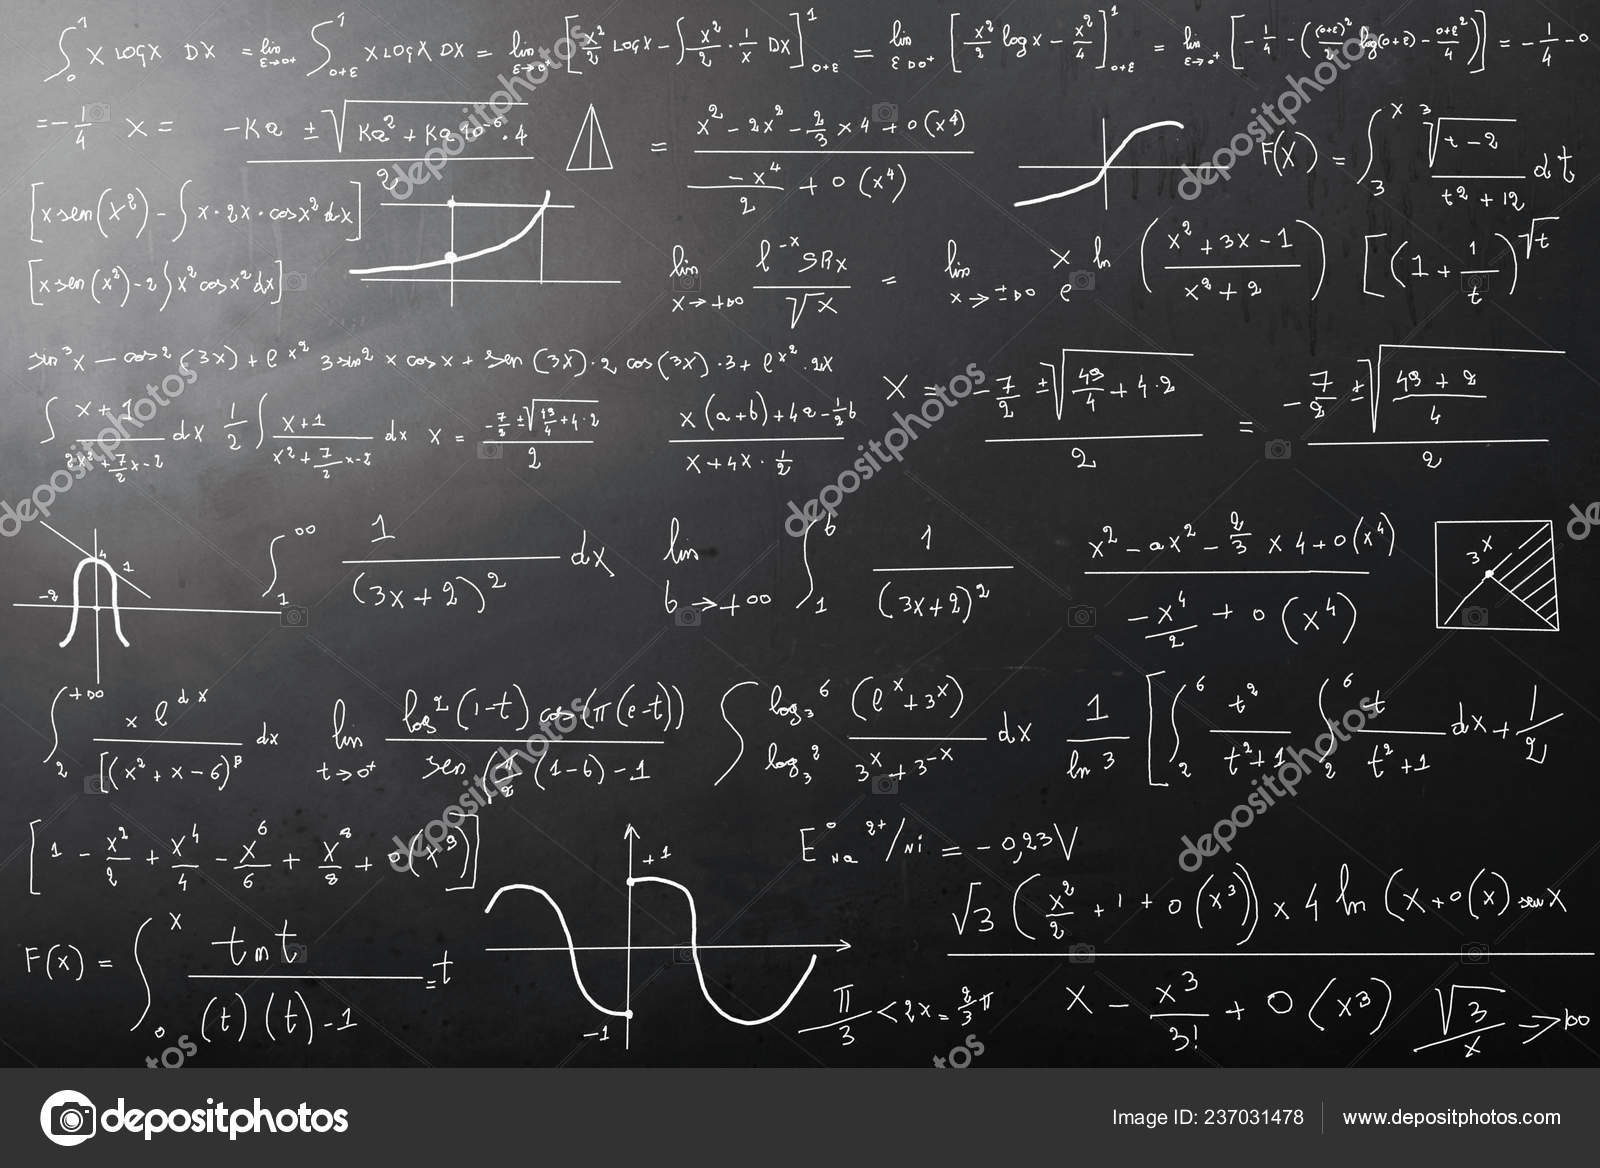 https://st4.depositphotos.com/13404340/23703/i/1600/depositphotos_237031478-stock-photo-complex-mathematical-calculations-blackboard.jpg